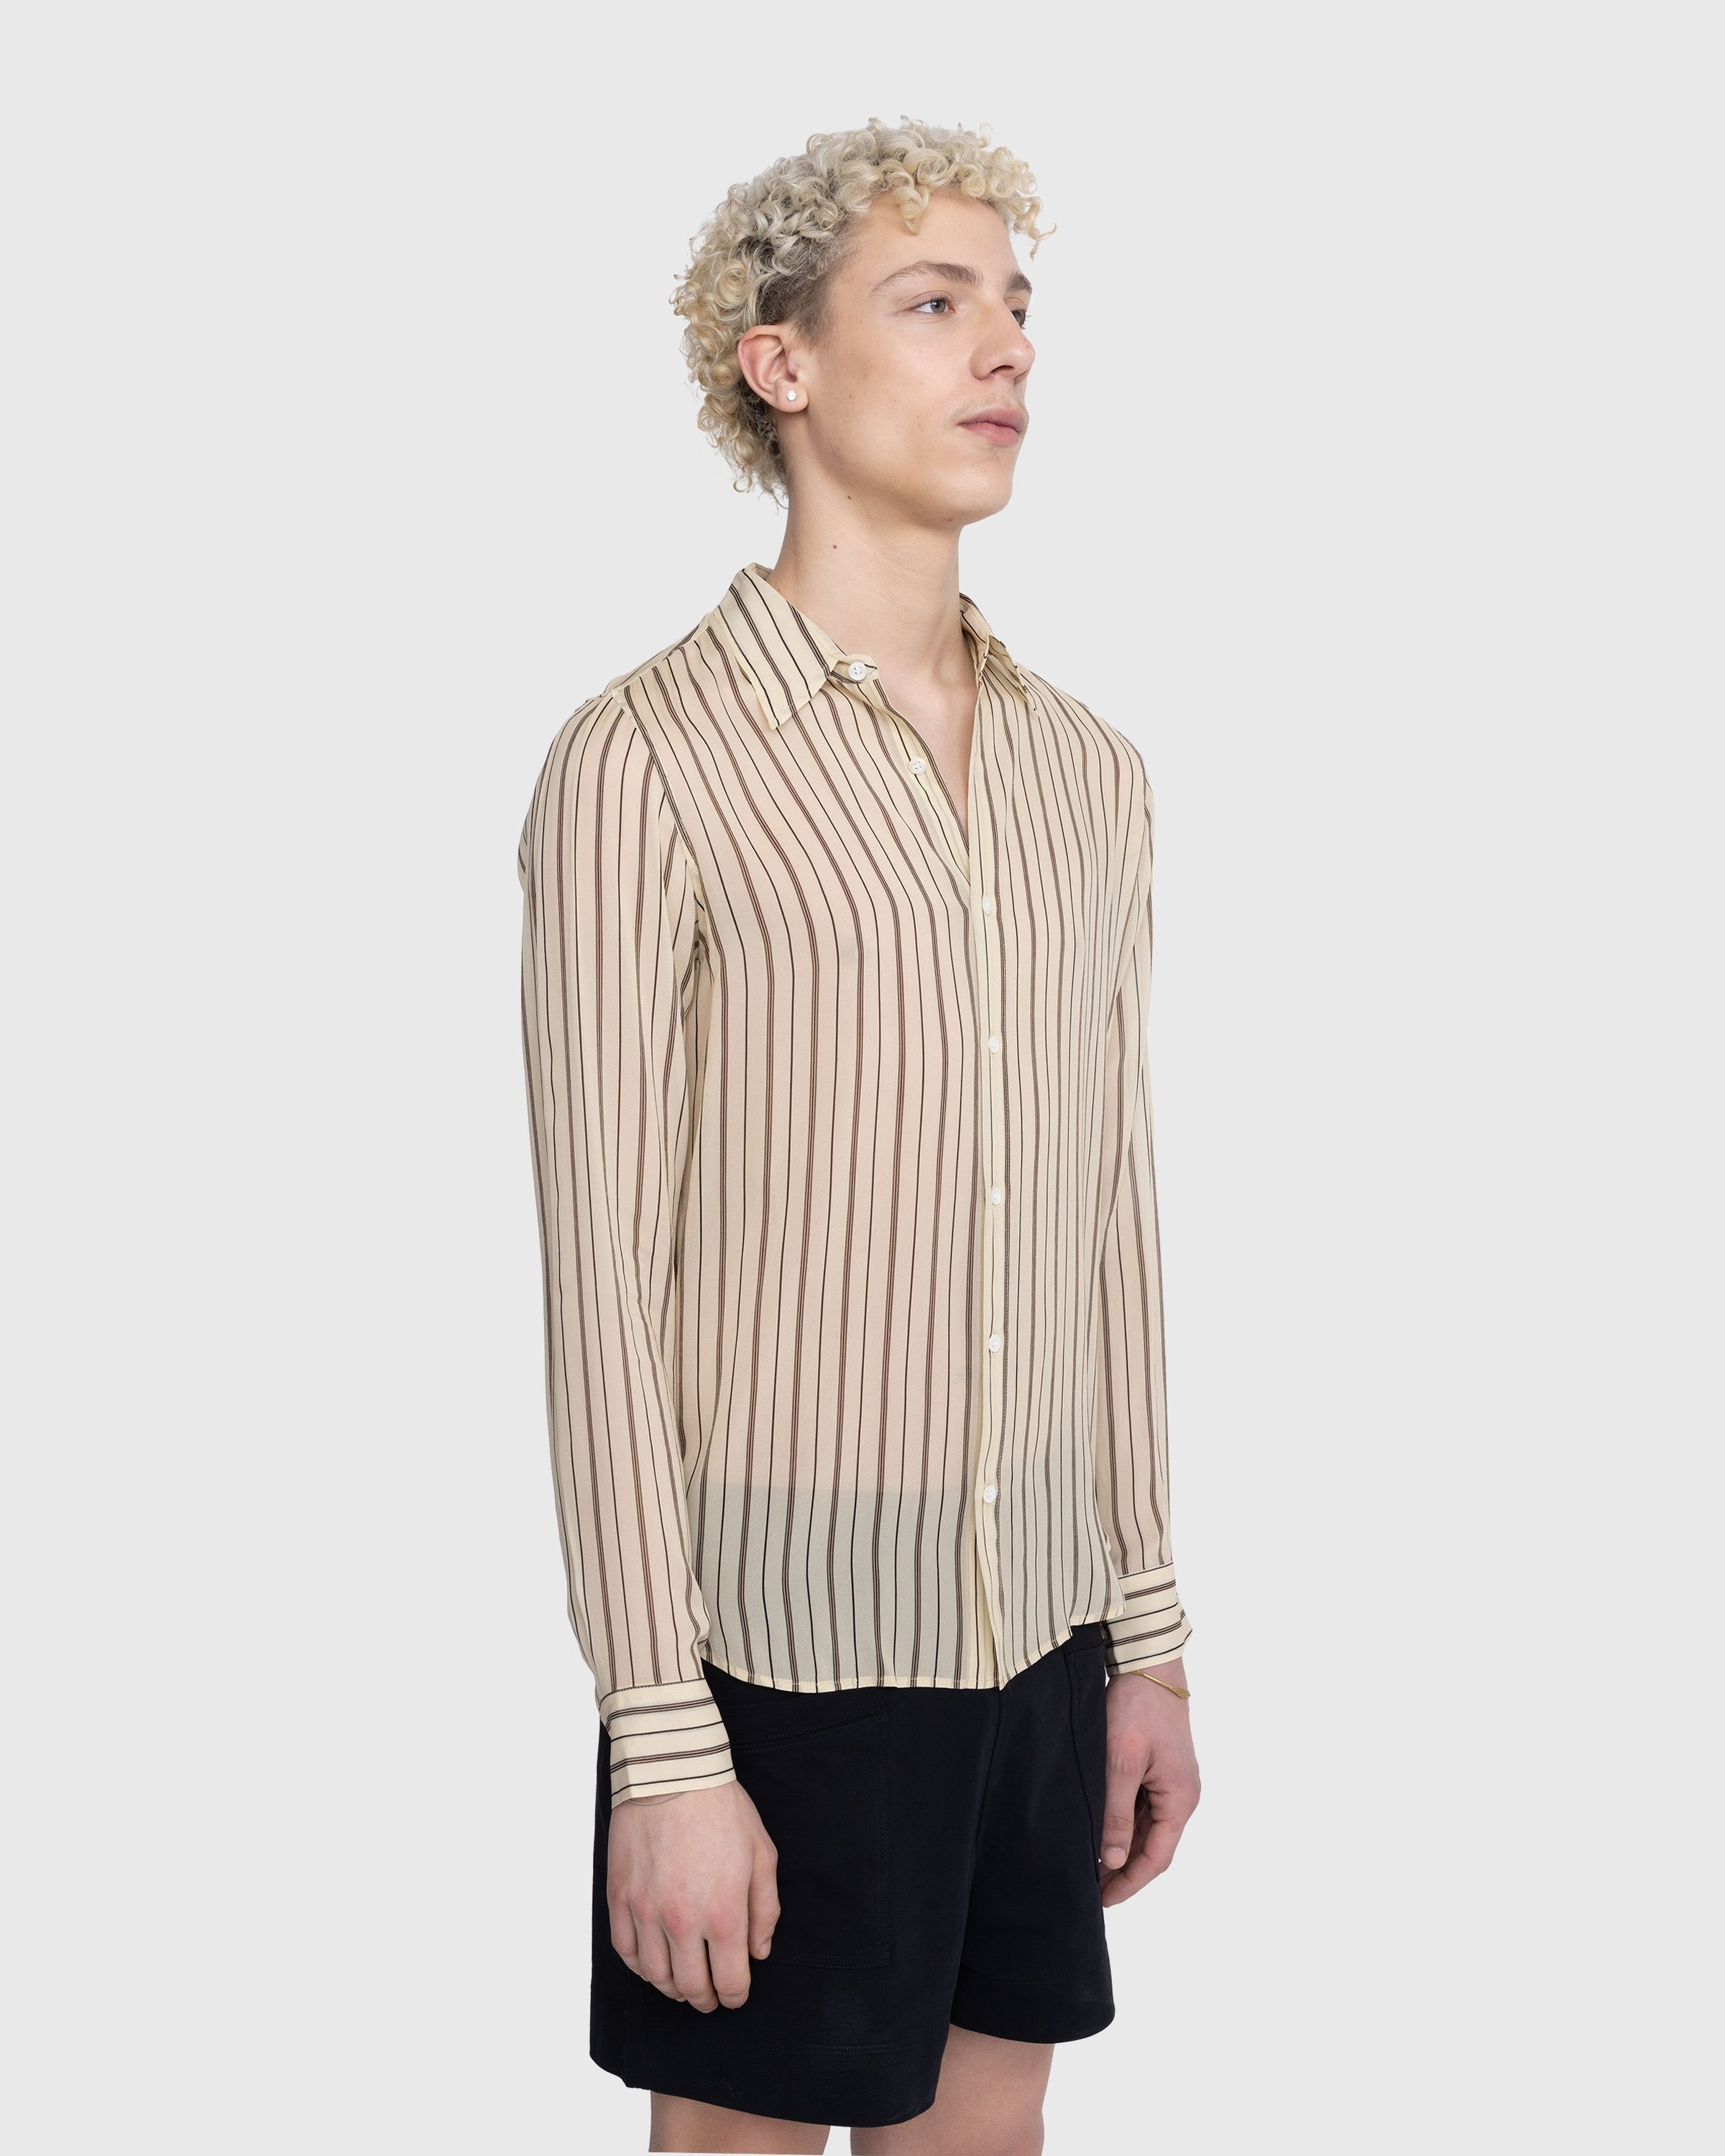 Dries van Noten – Celdon Shirt Ecru - Longsleeve Shirts - Beige - Image 4